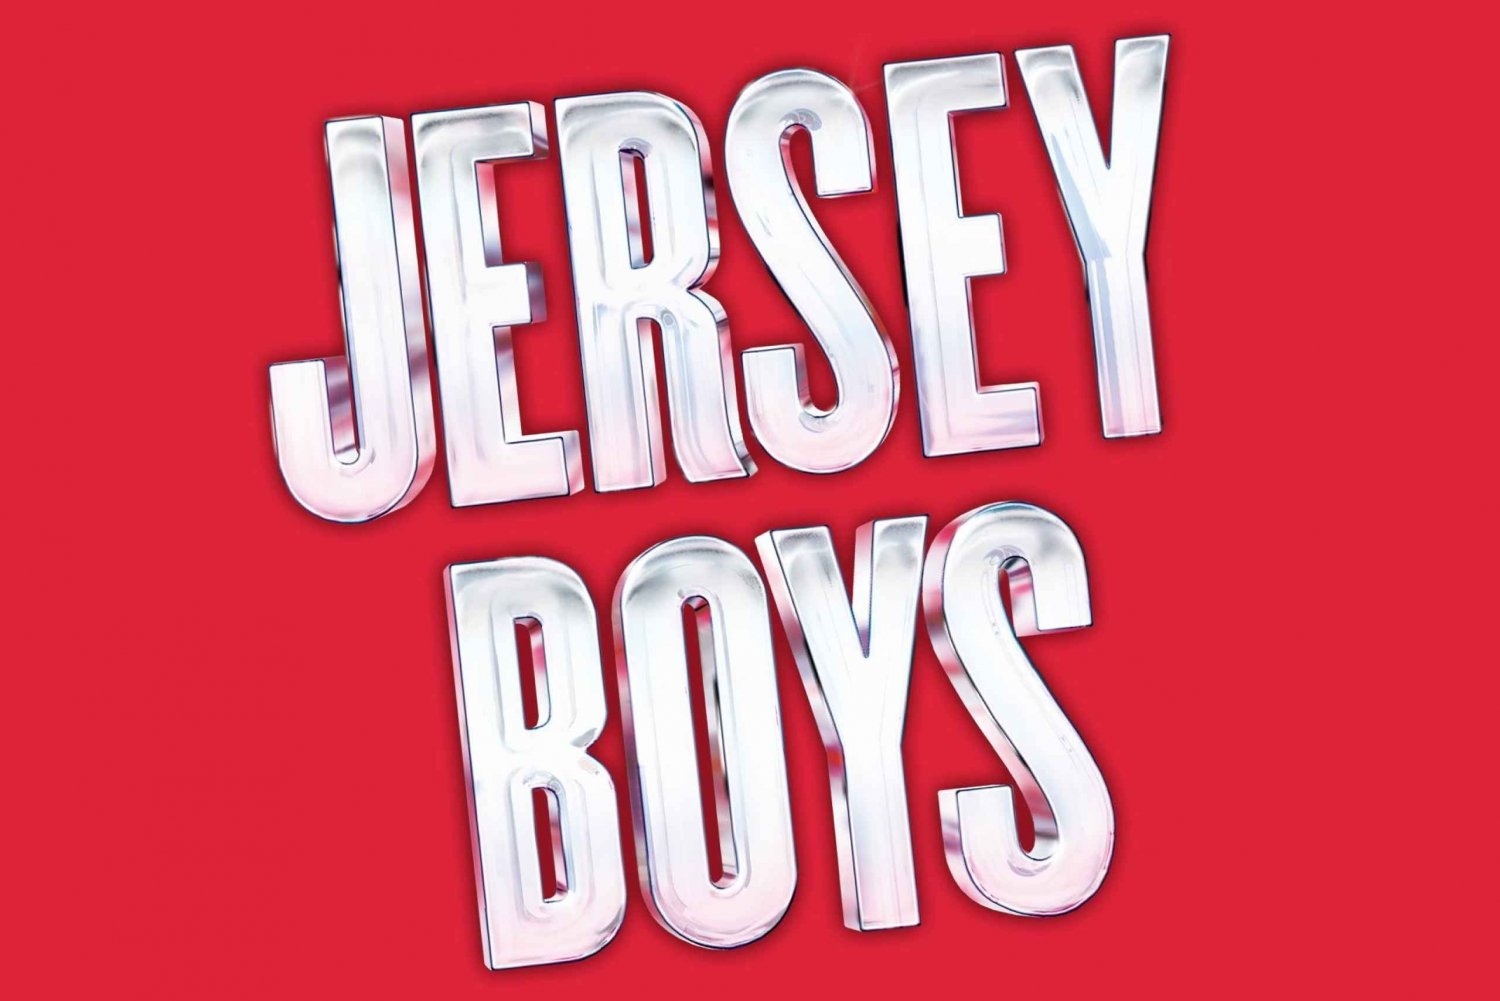 Las Vegas: Jersey Boys Musical al The Orleans